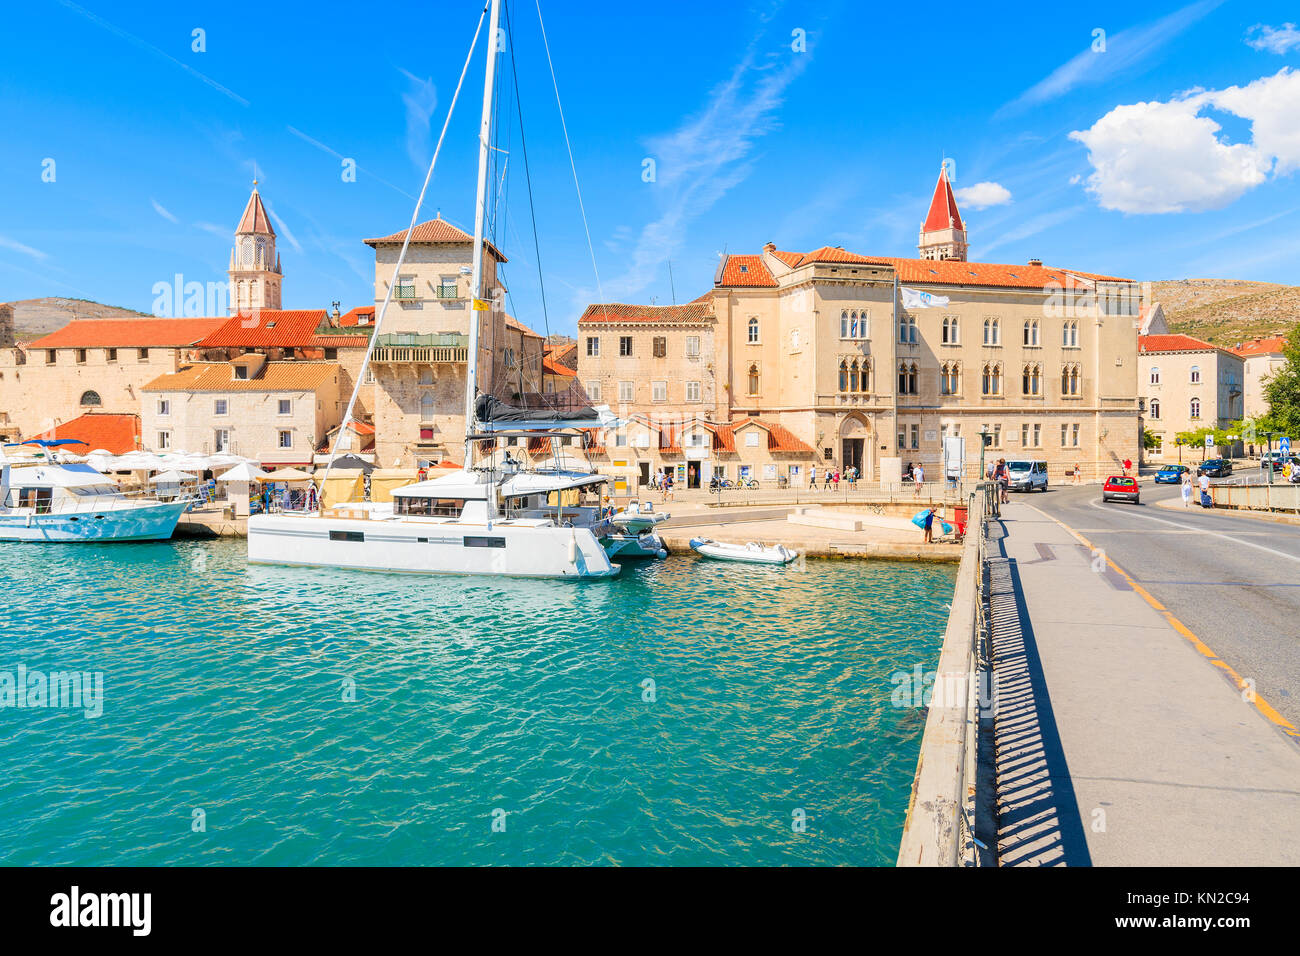 View of historic buildings and catamaran boat in Trogir town from bridge over canal, Dalmatia, Croatia Stock Photo